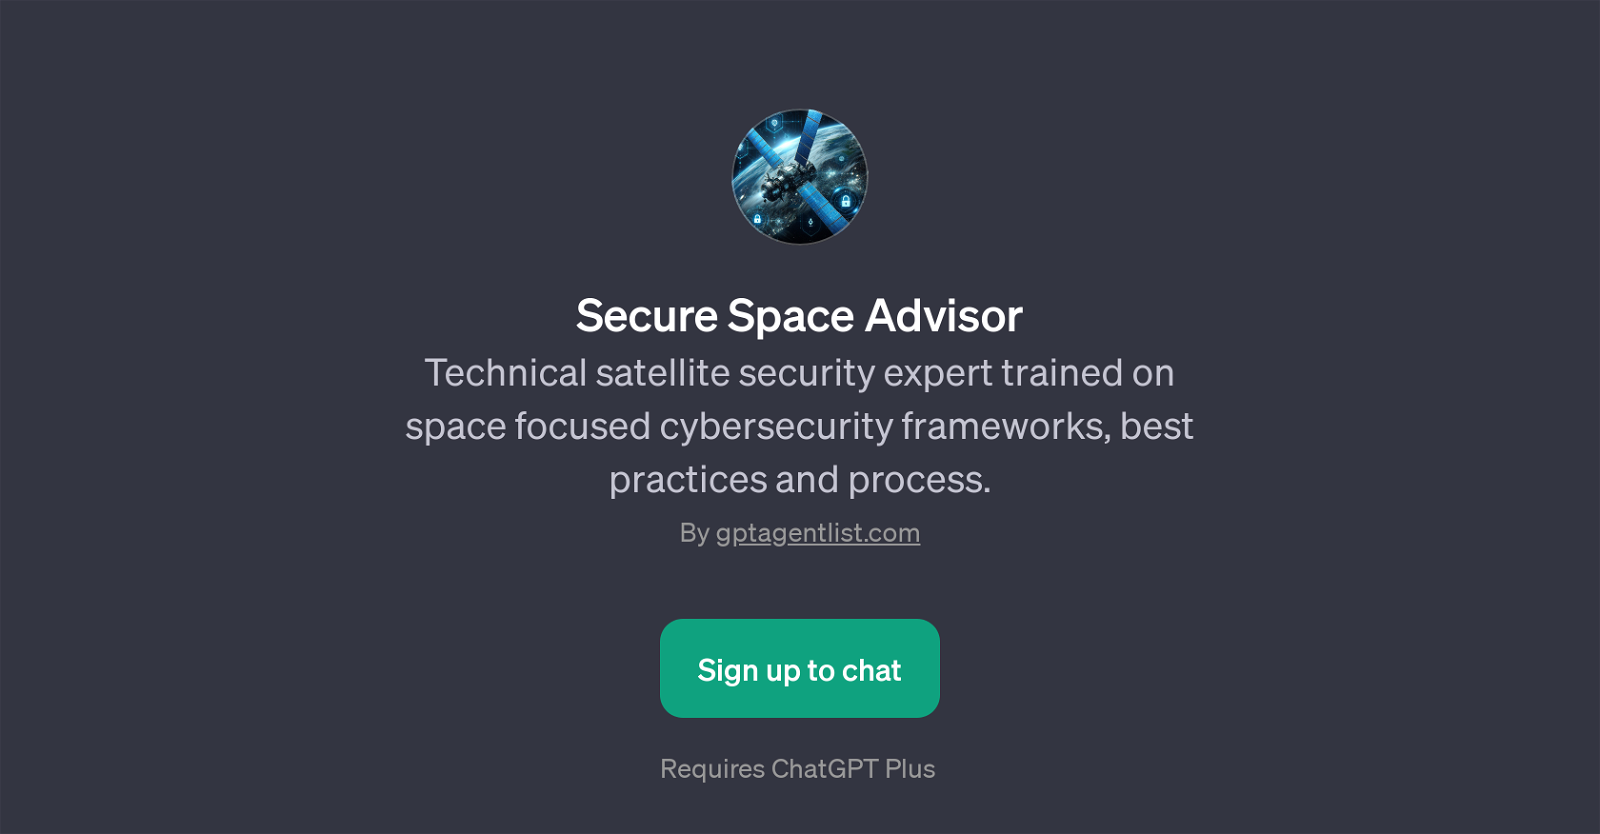 Secure Space Advisor website